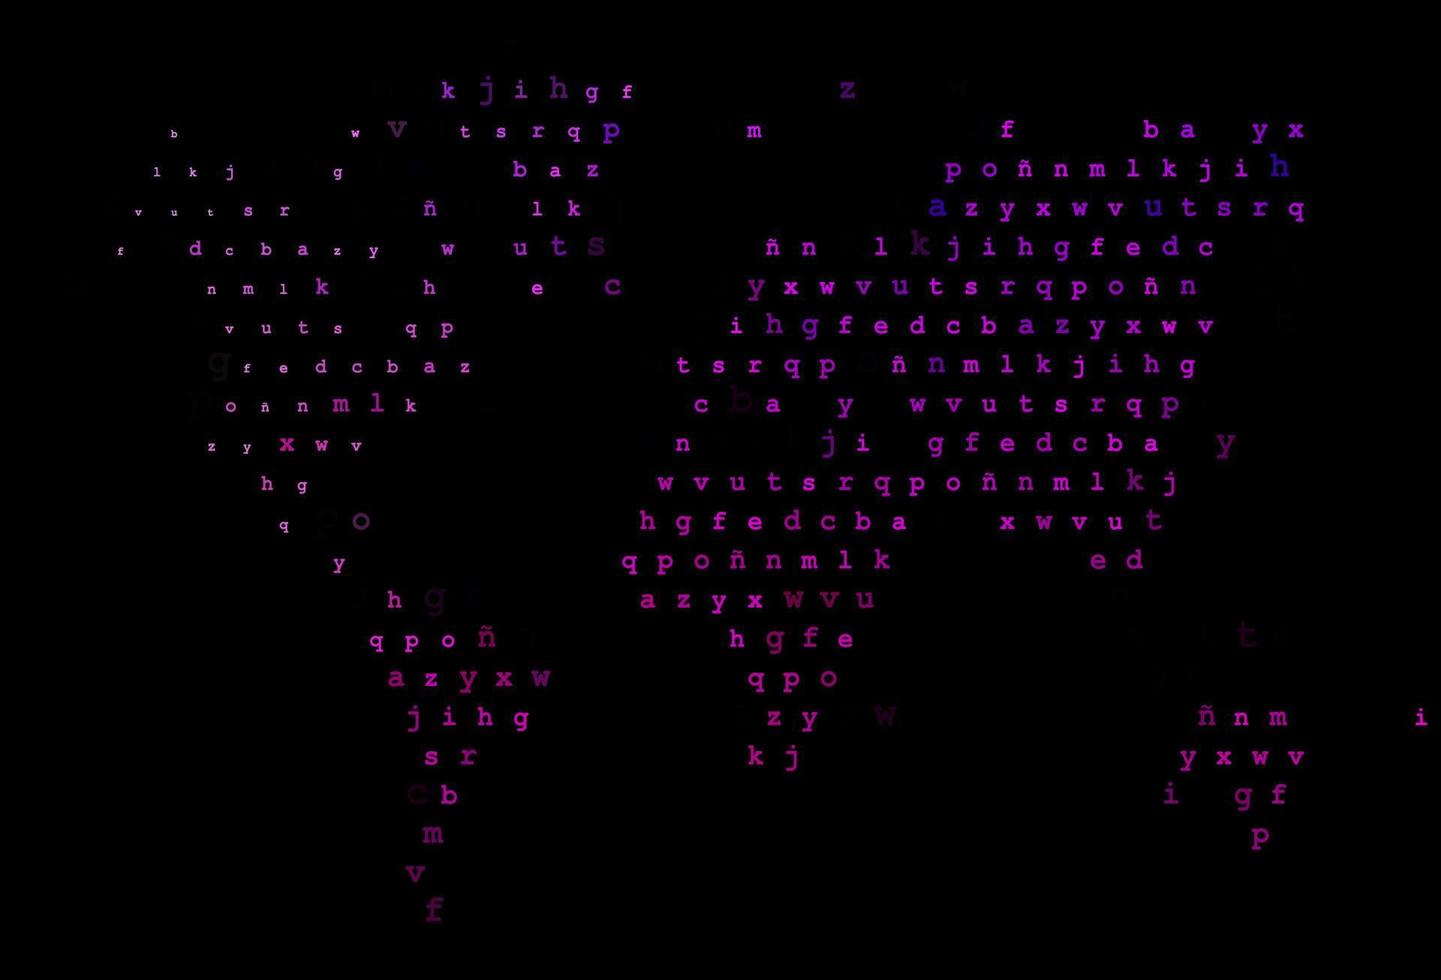 dunkelviolettes Vektorlayout mit lateinischem Alphabet. vektor